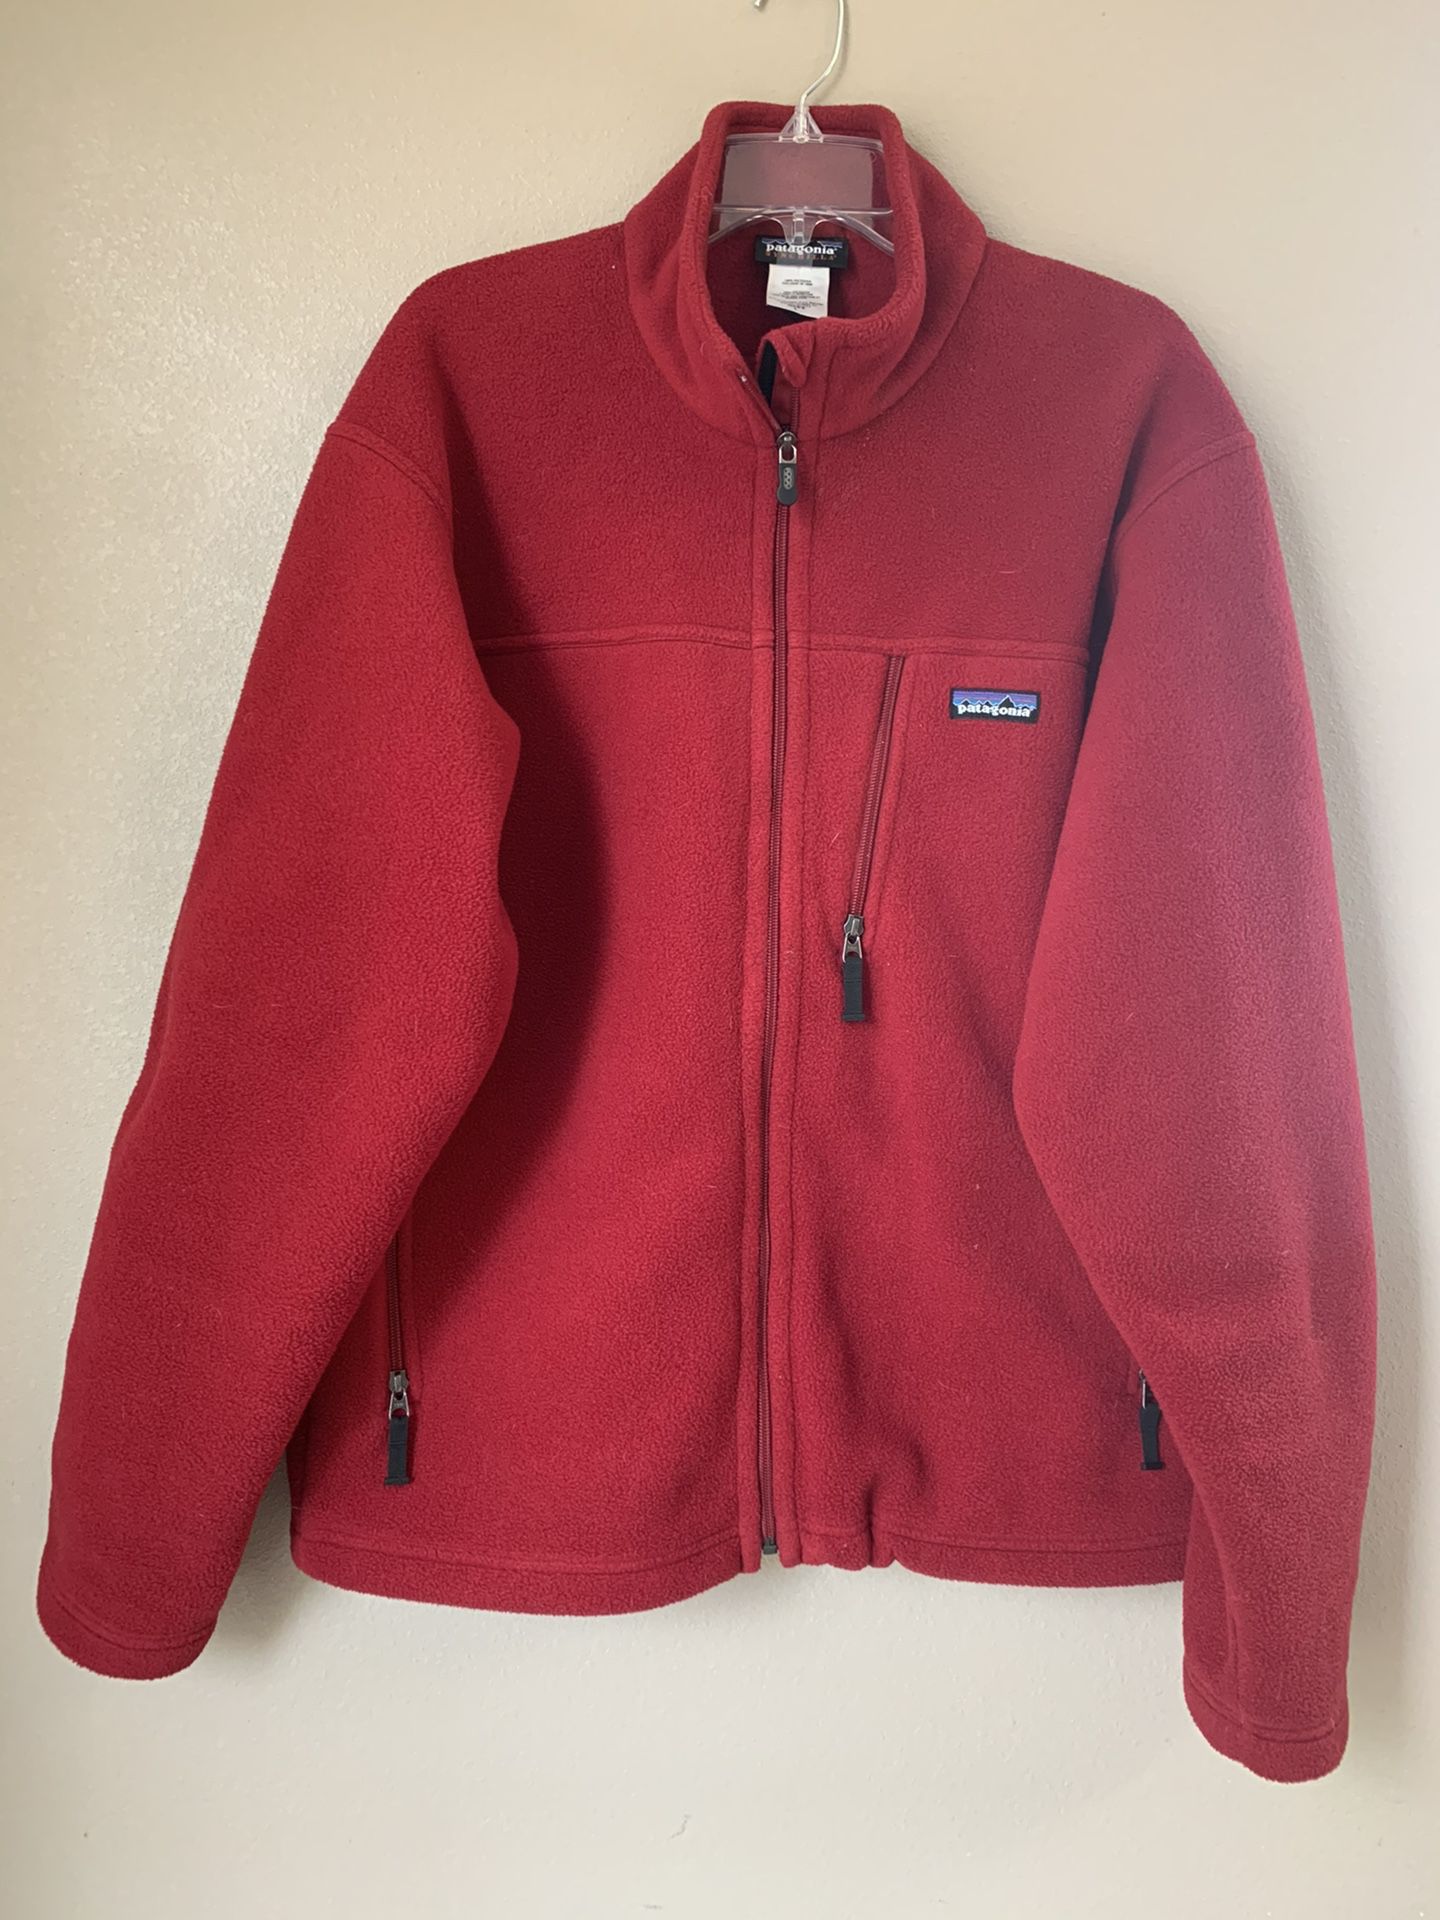 Patagonia men’s warm Fleece jacket. Size L